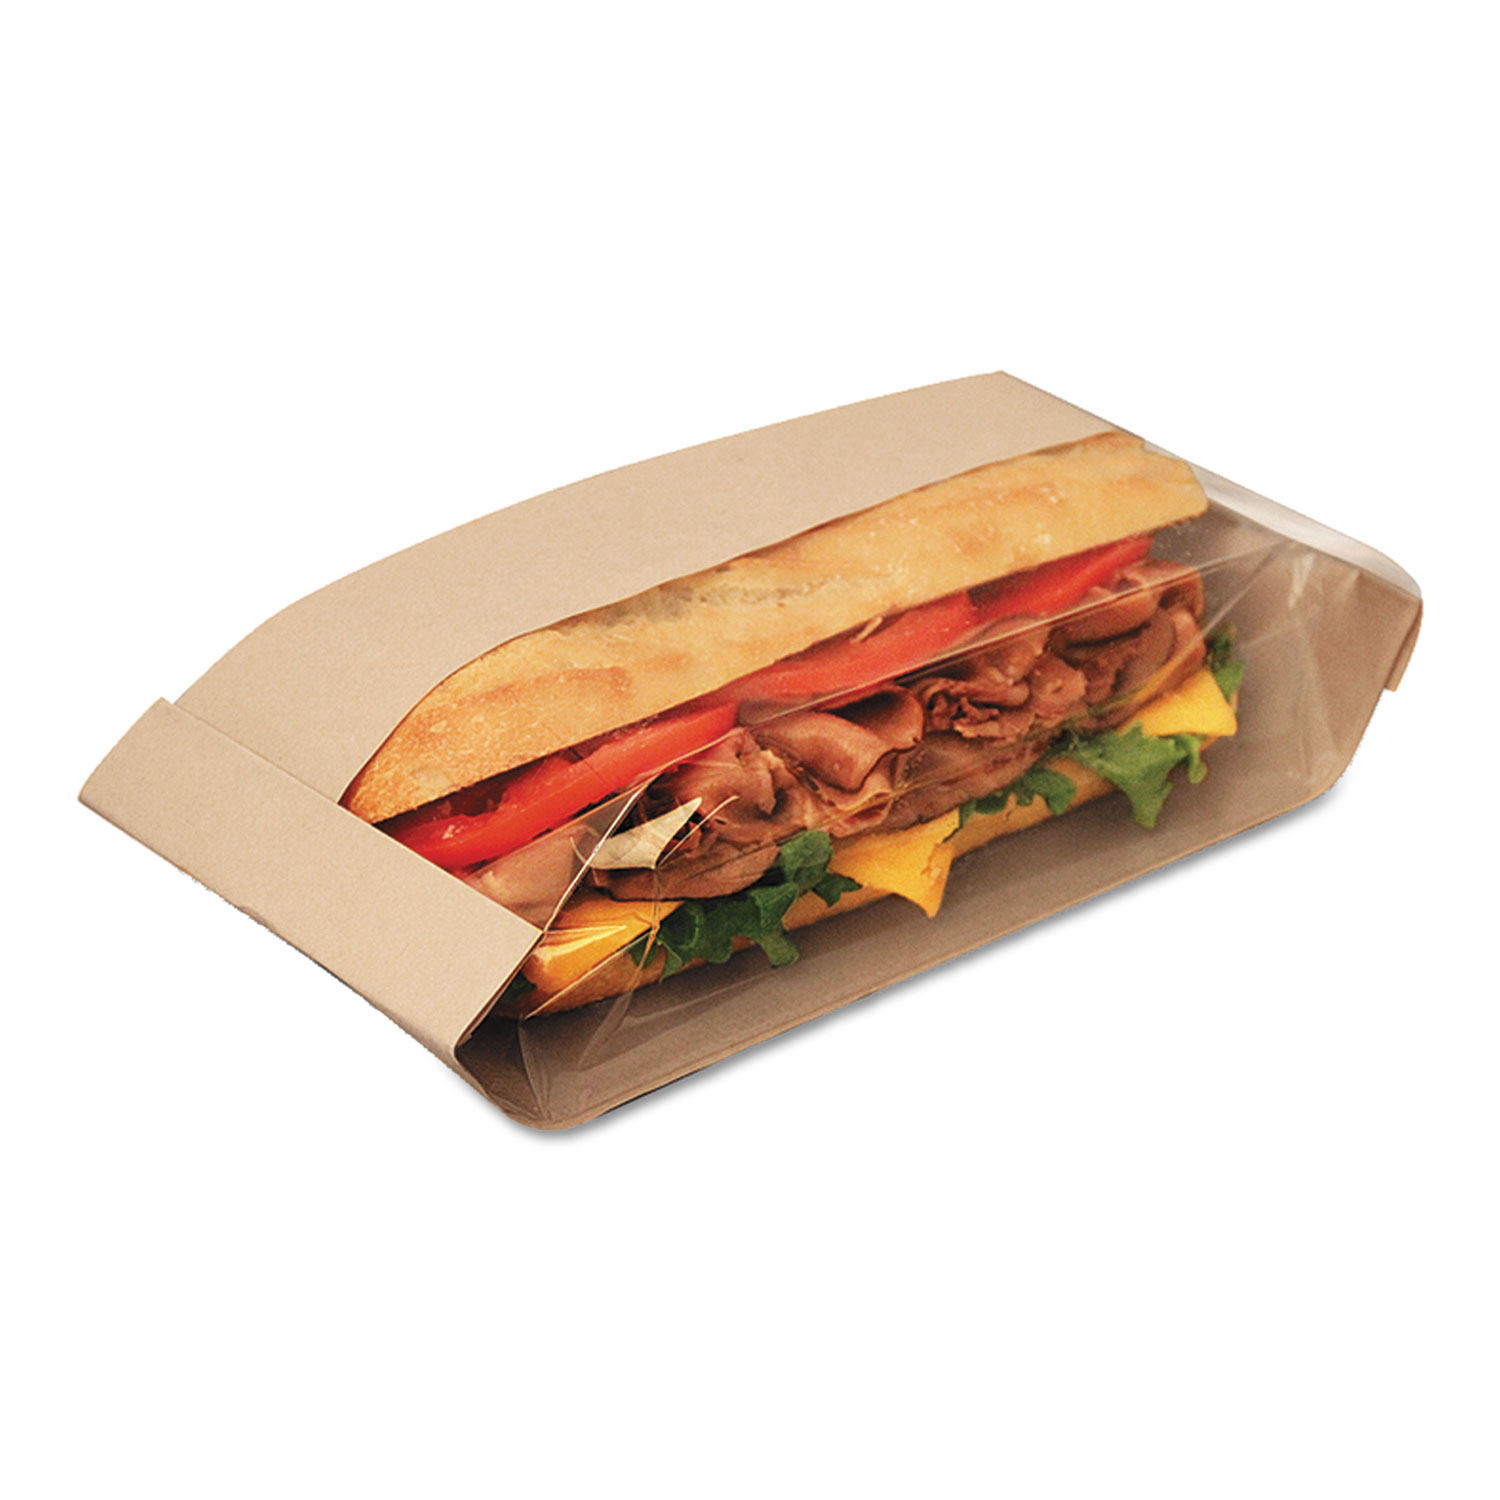 Dubl View Sandwich Bags, 2.55 mil, 11 3/4 x 4 1/4 x 2 3/4, Natural Brown, 500/CT